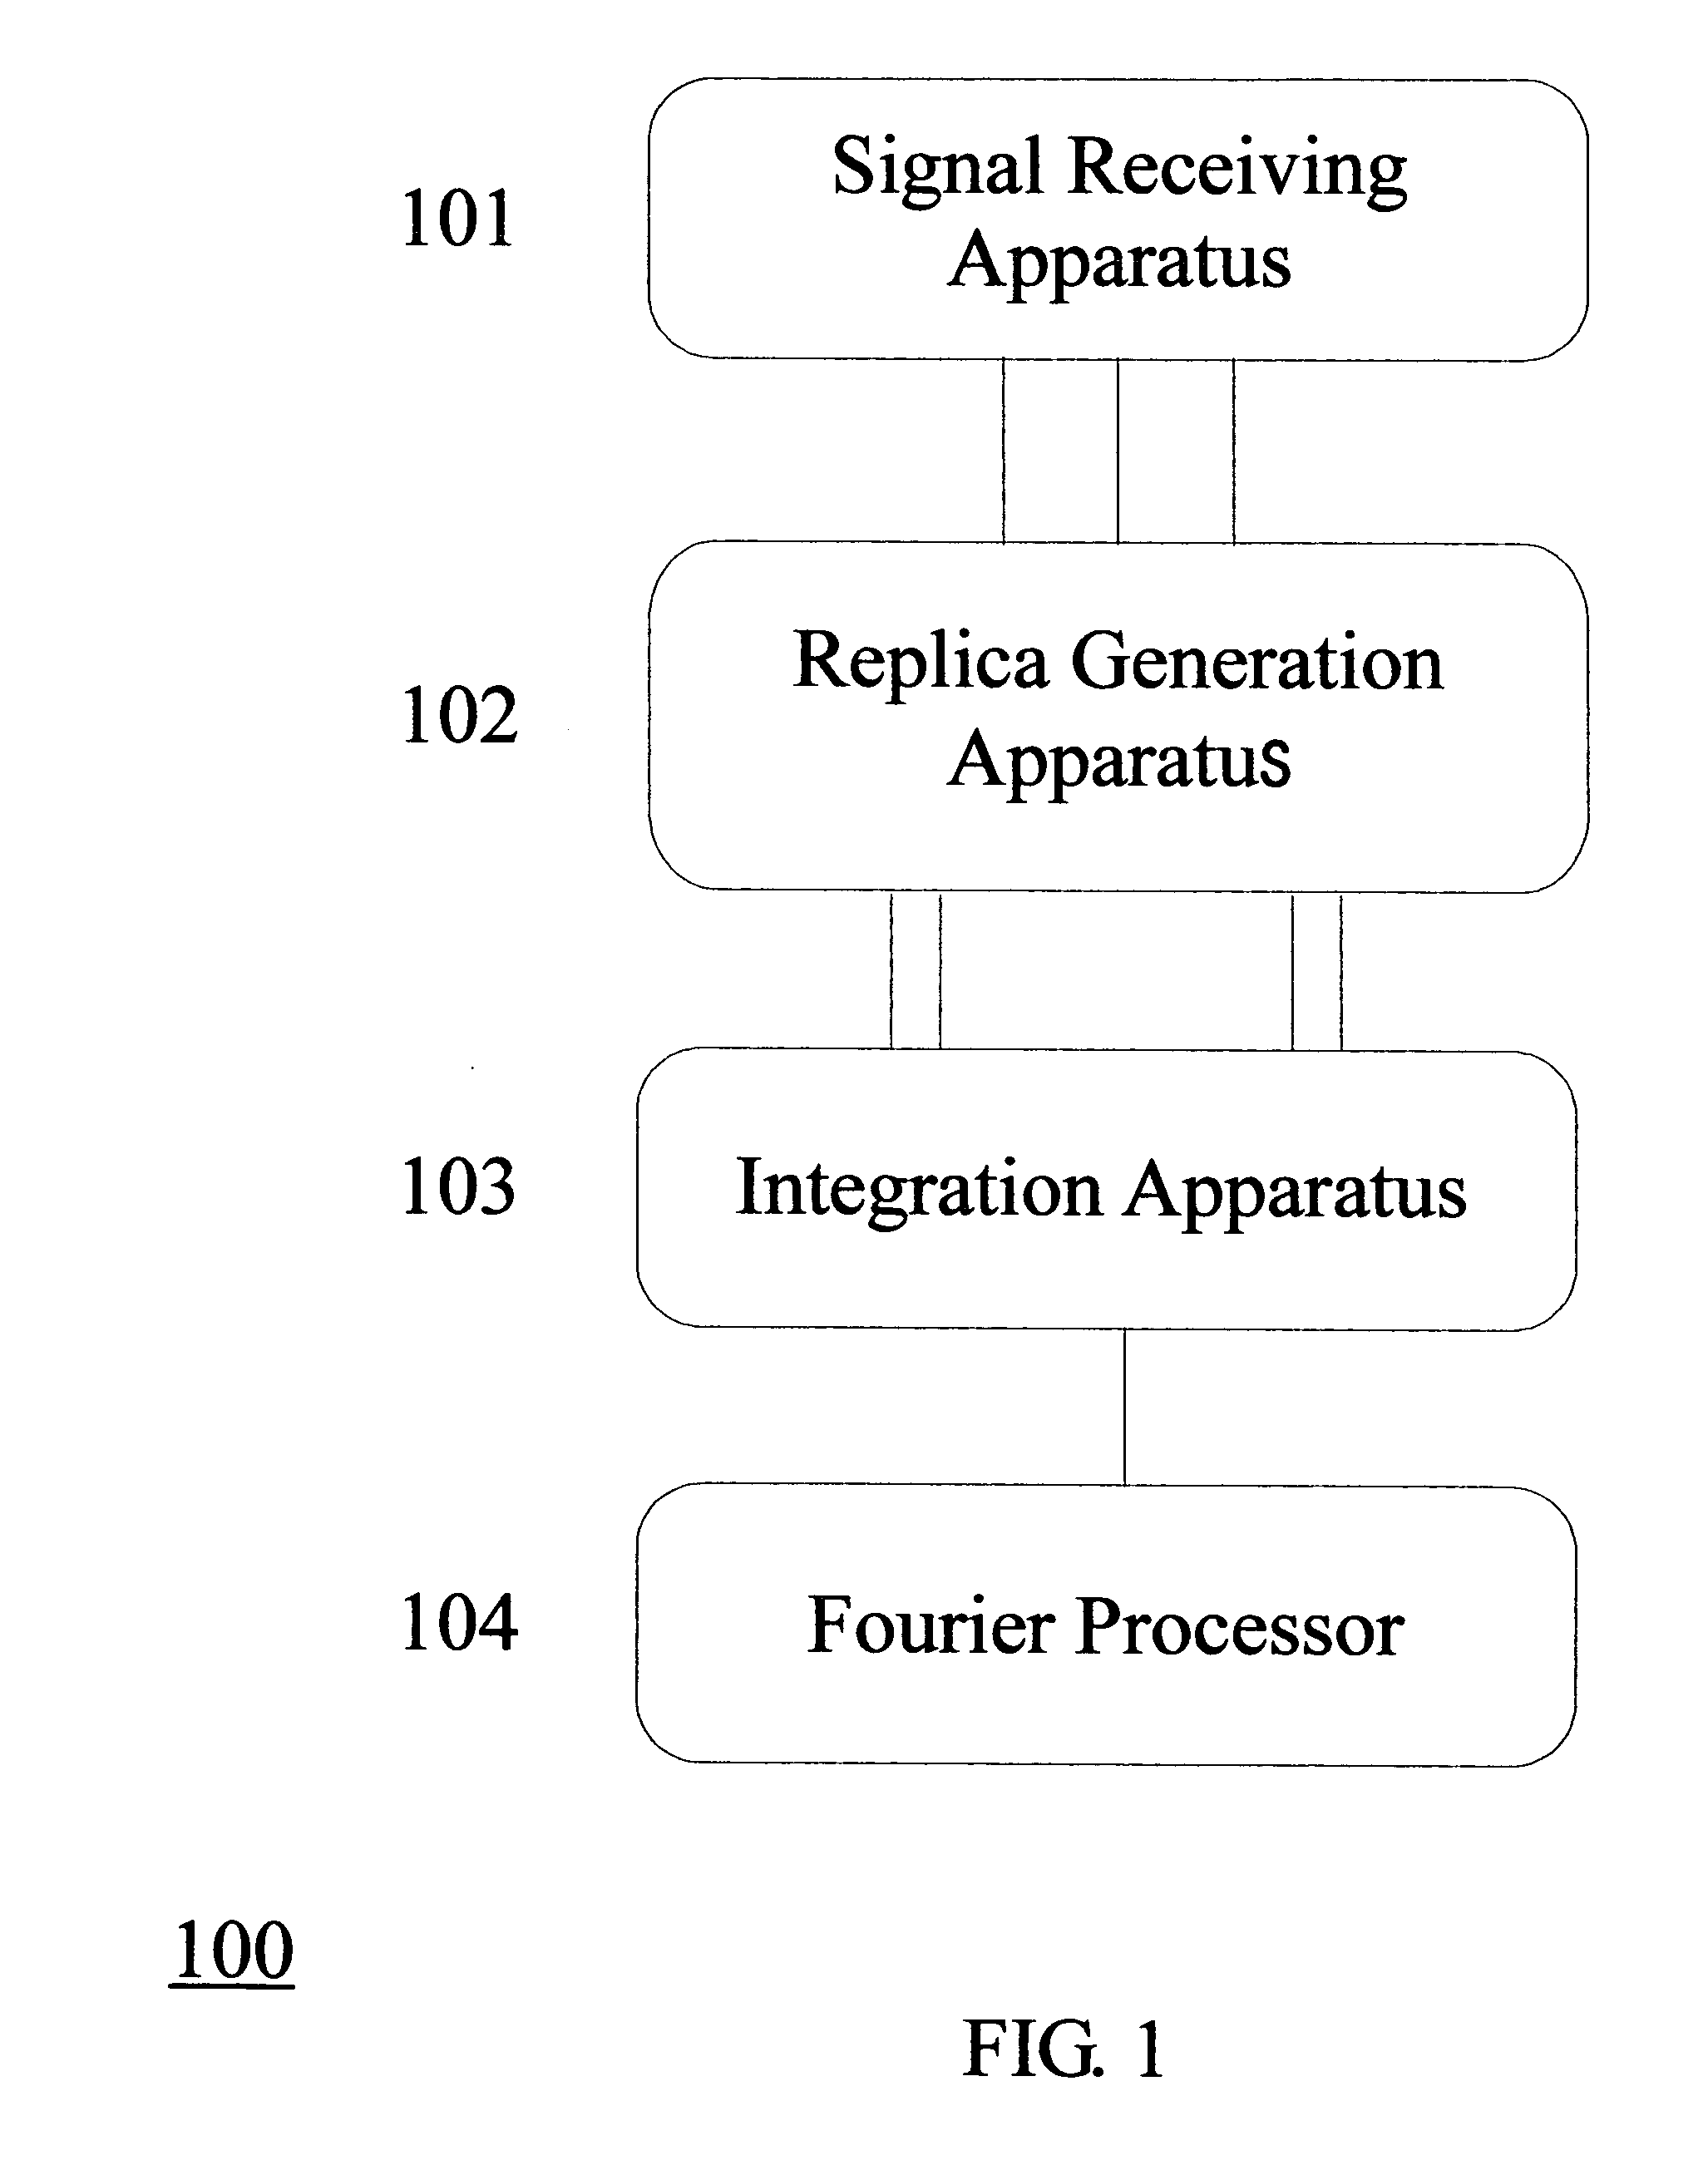 Robust and broadband signal processing using replica generation apparatus